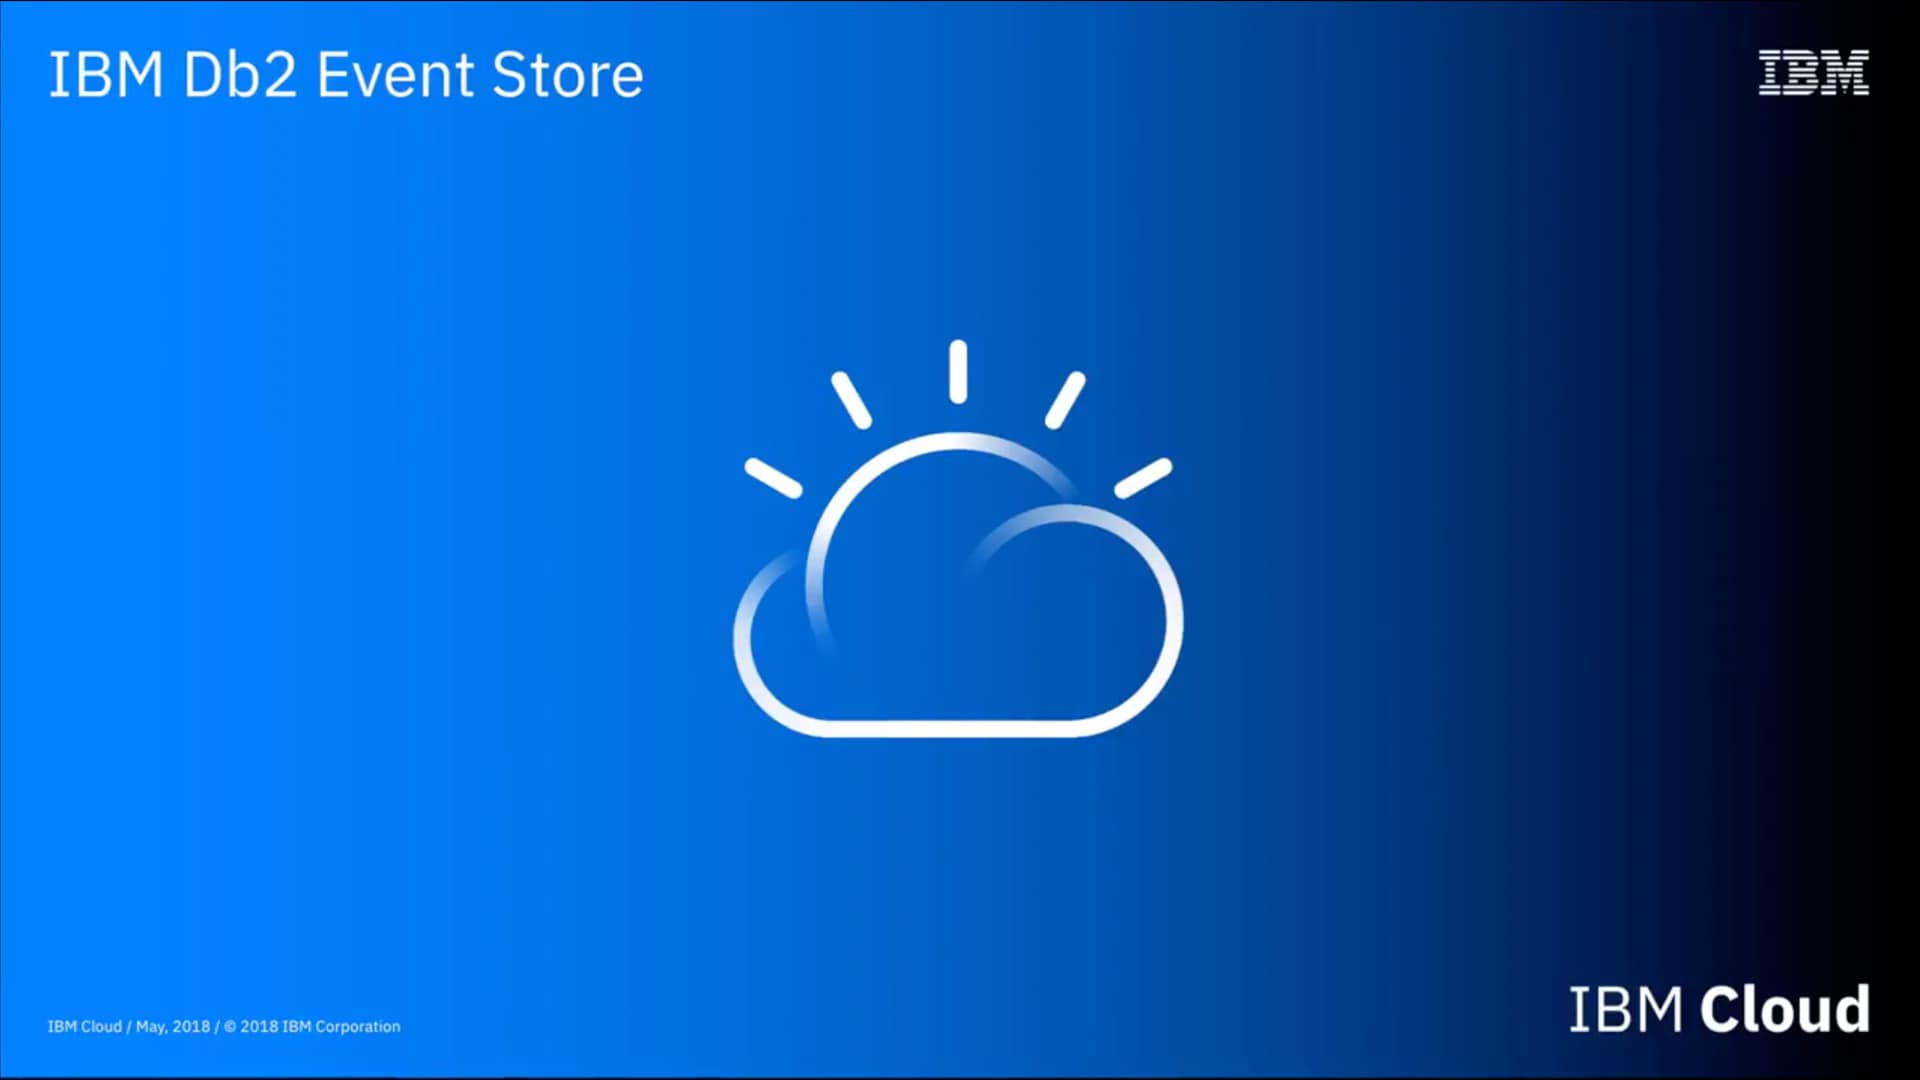 IBM DB2 Logo - Db2 Event Store - Overview | IBM